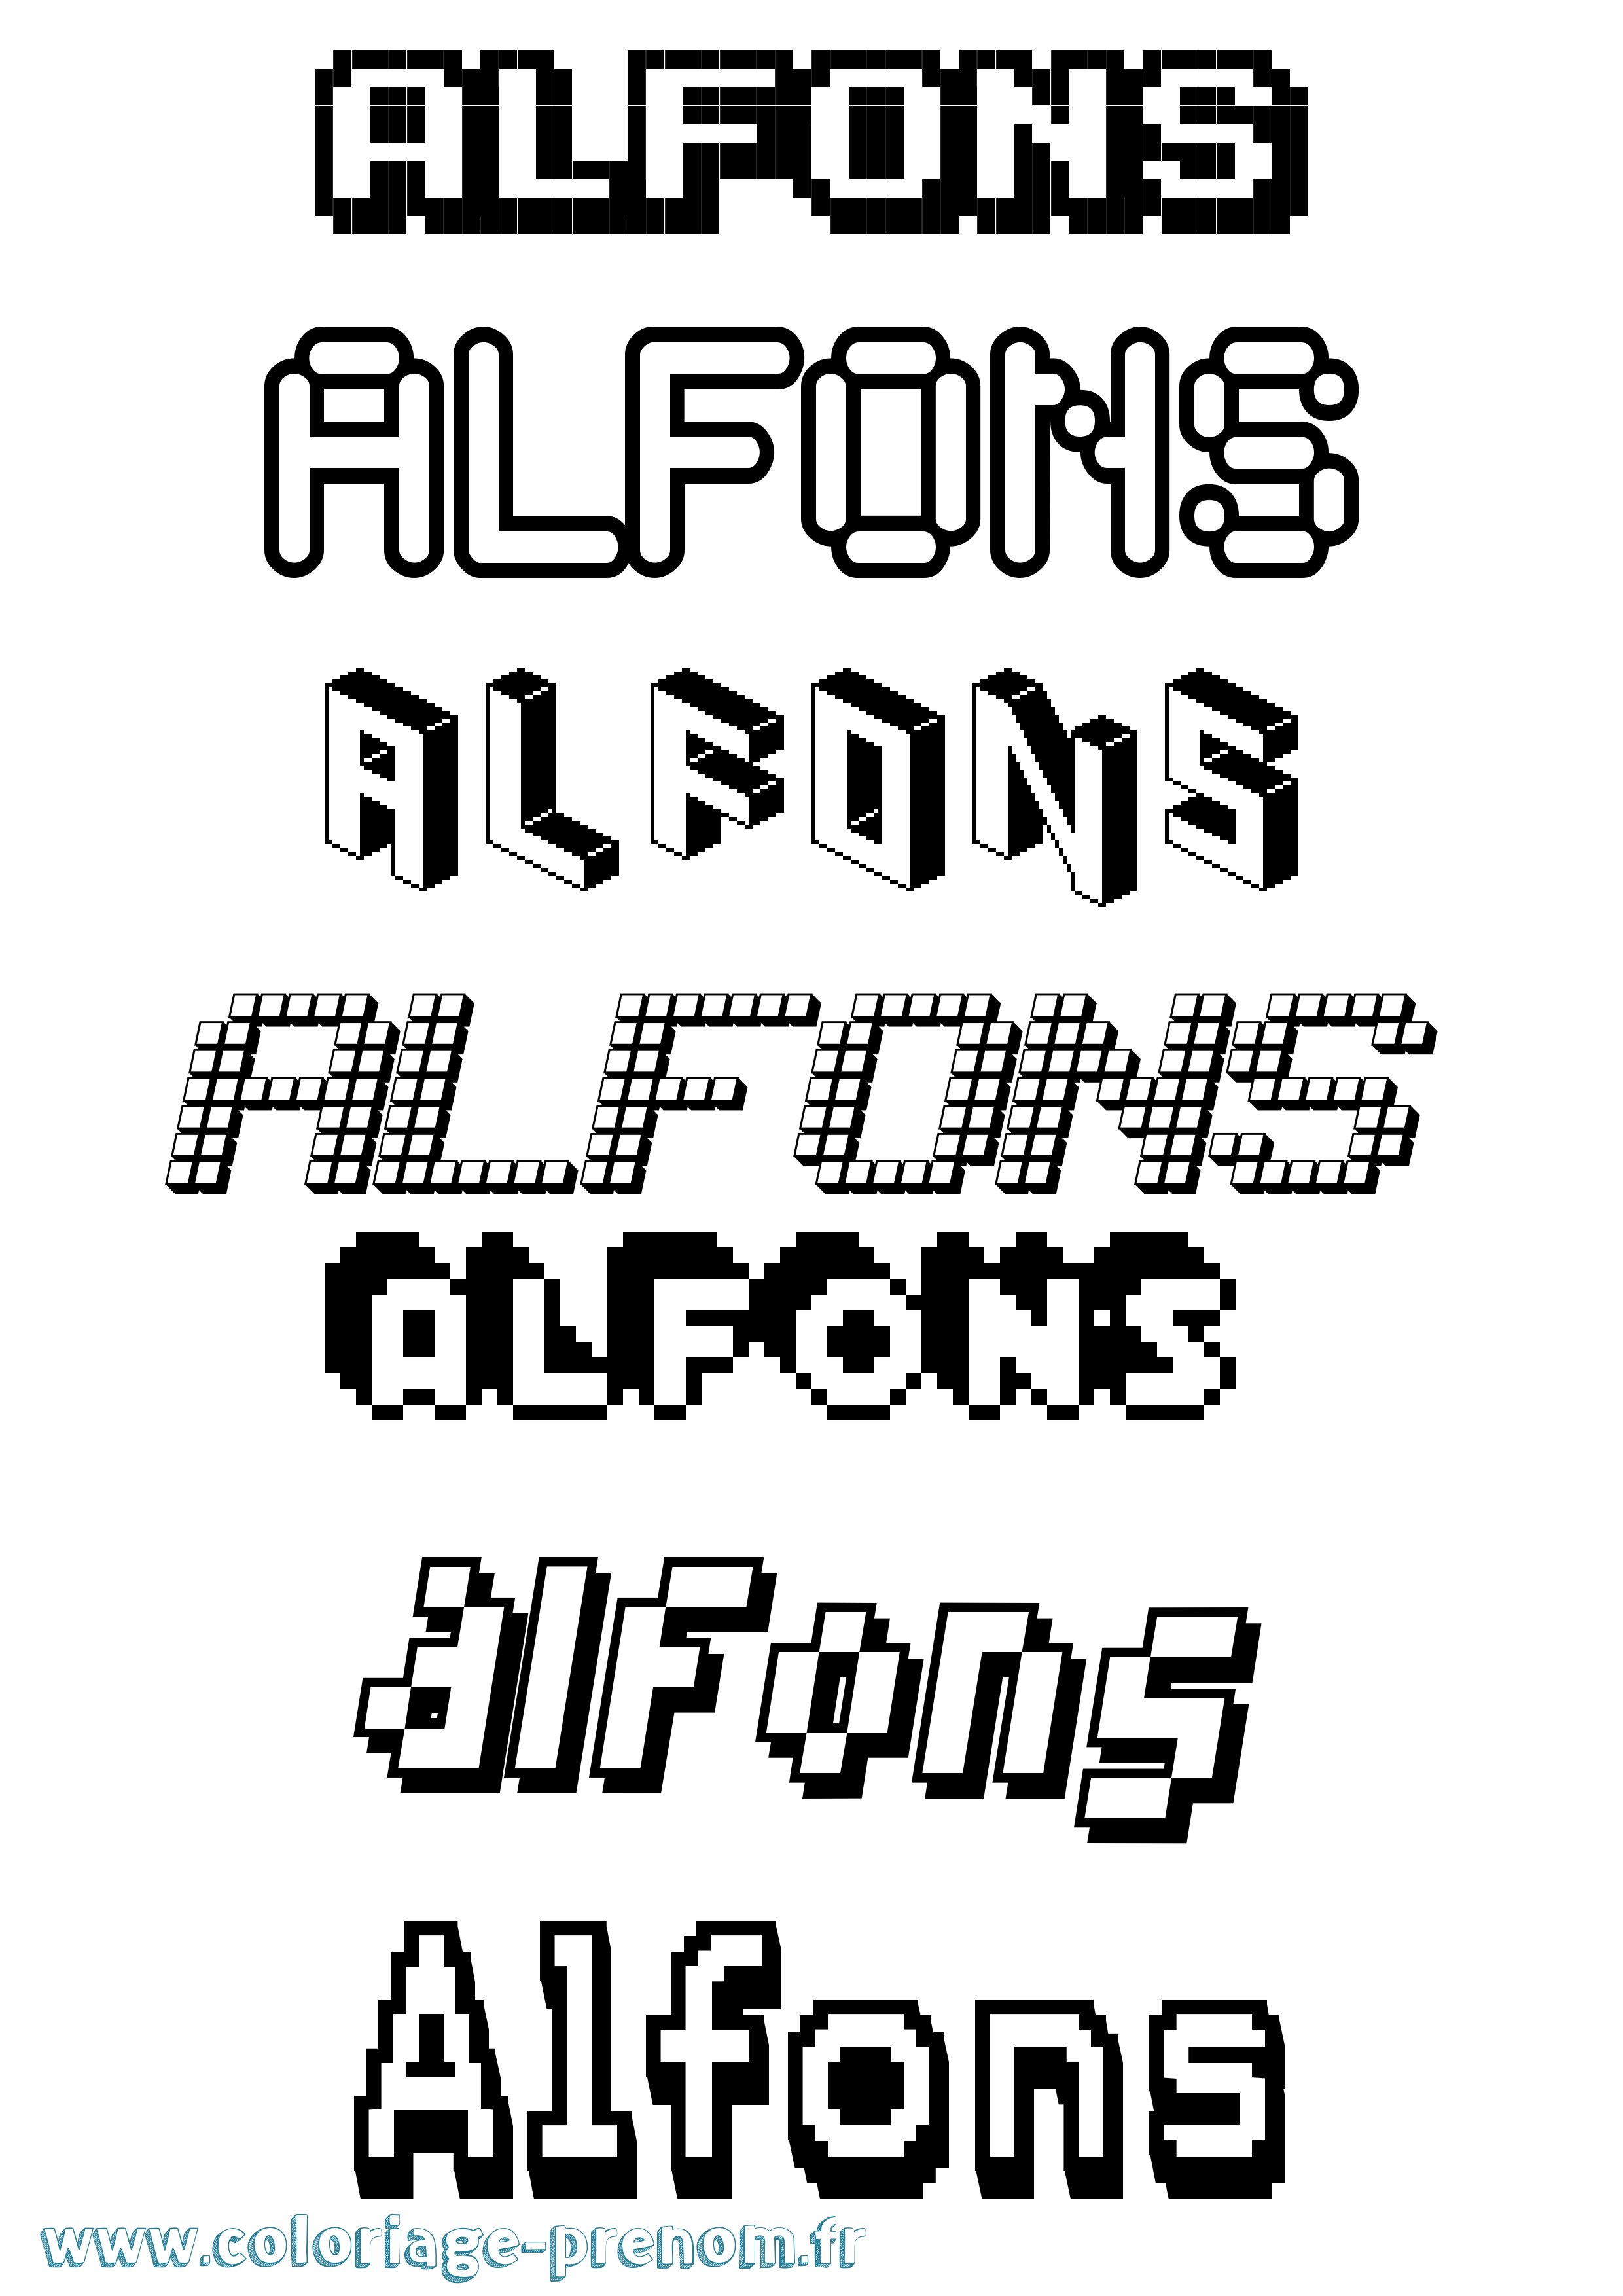 Coloriage prénom Alfons Pixel